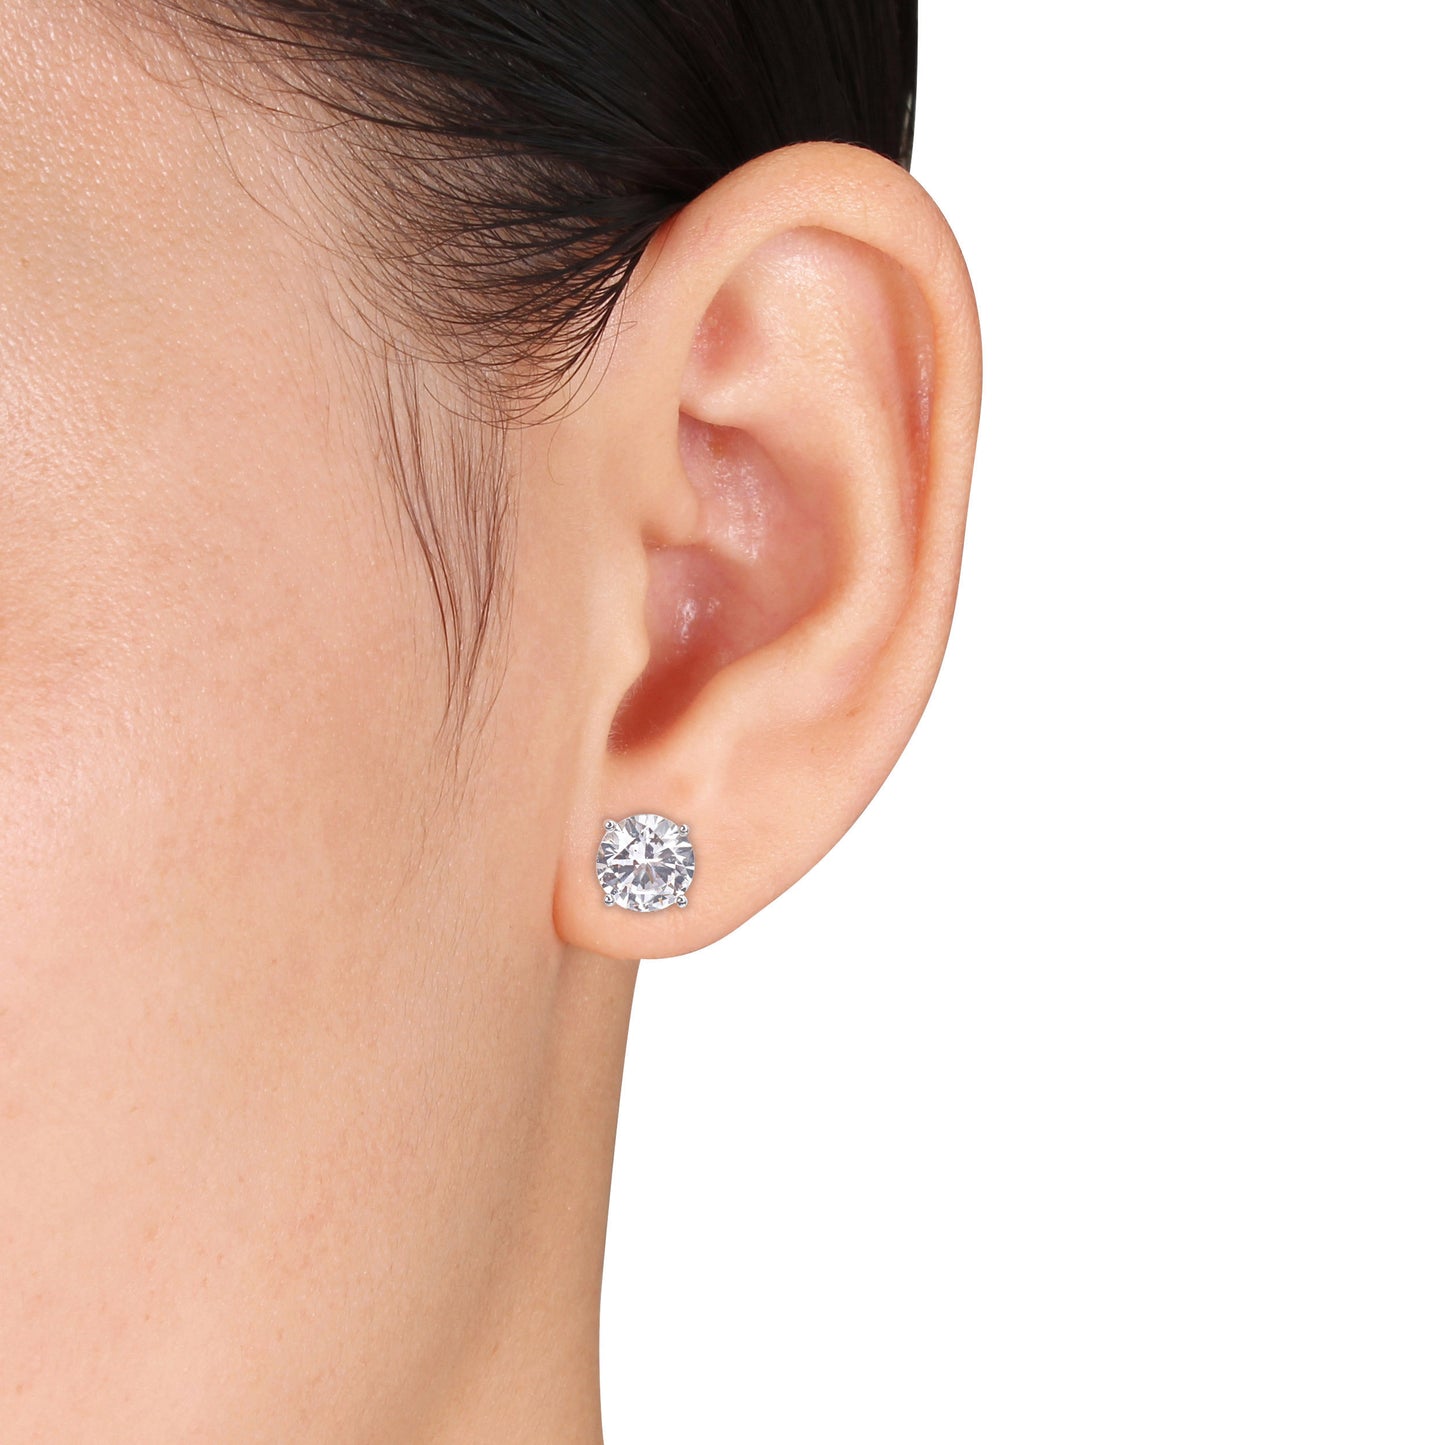 4 4/5 ct TGW Created white sapphire fashion post earrings silver